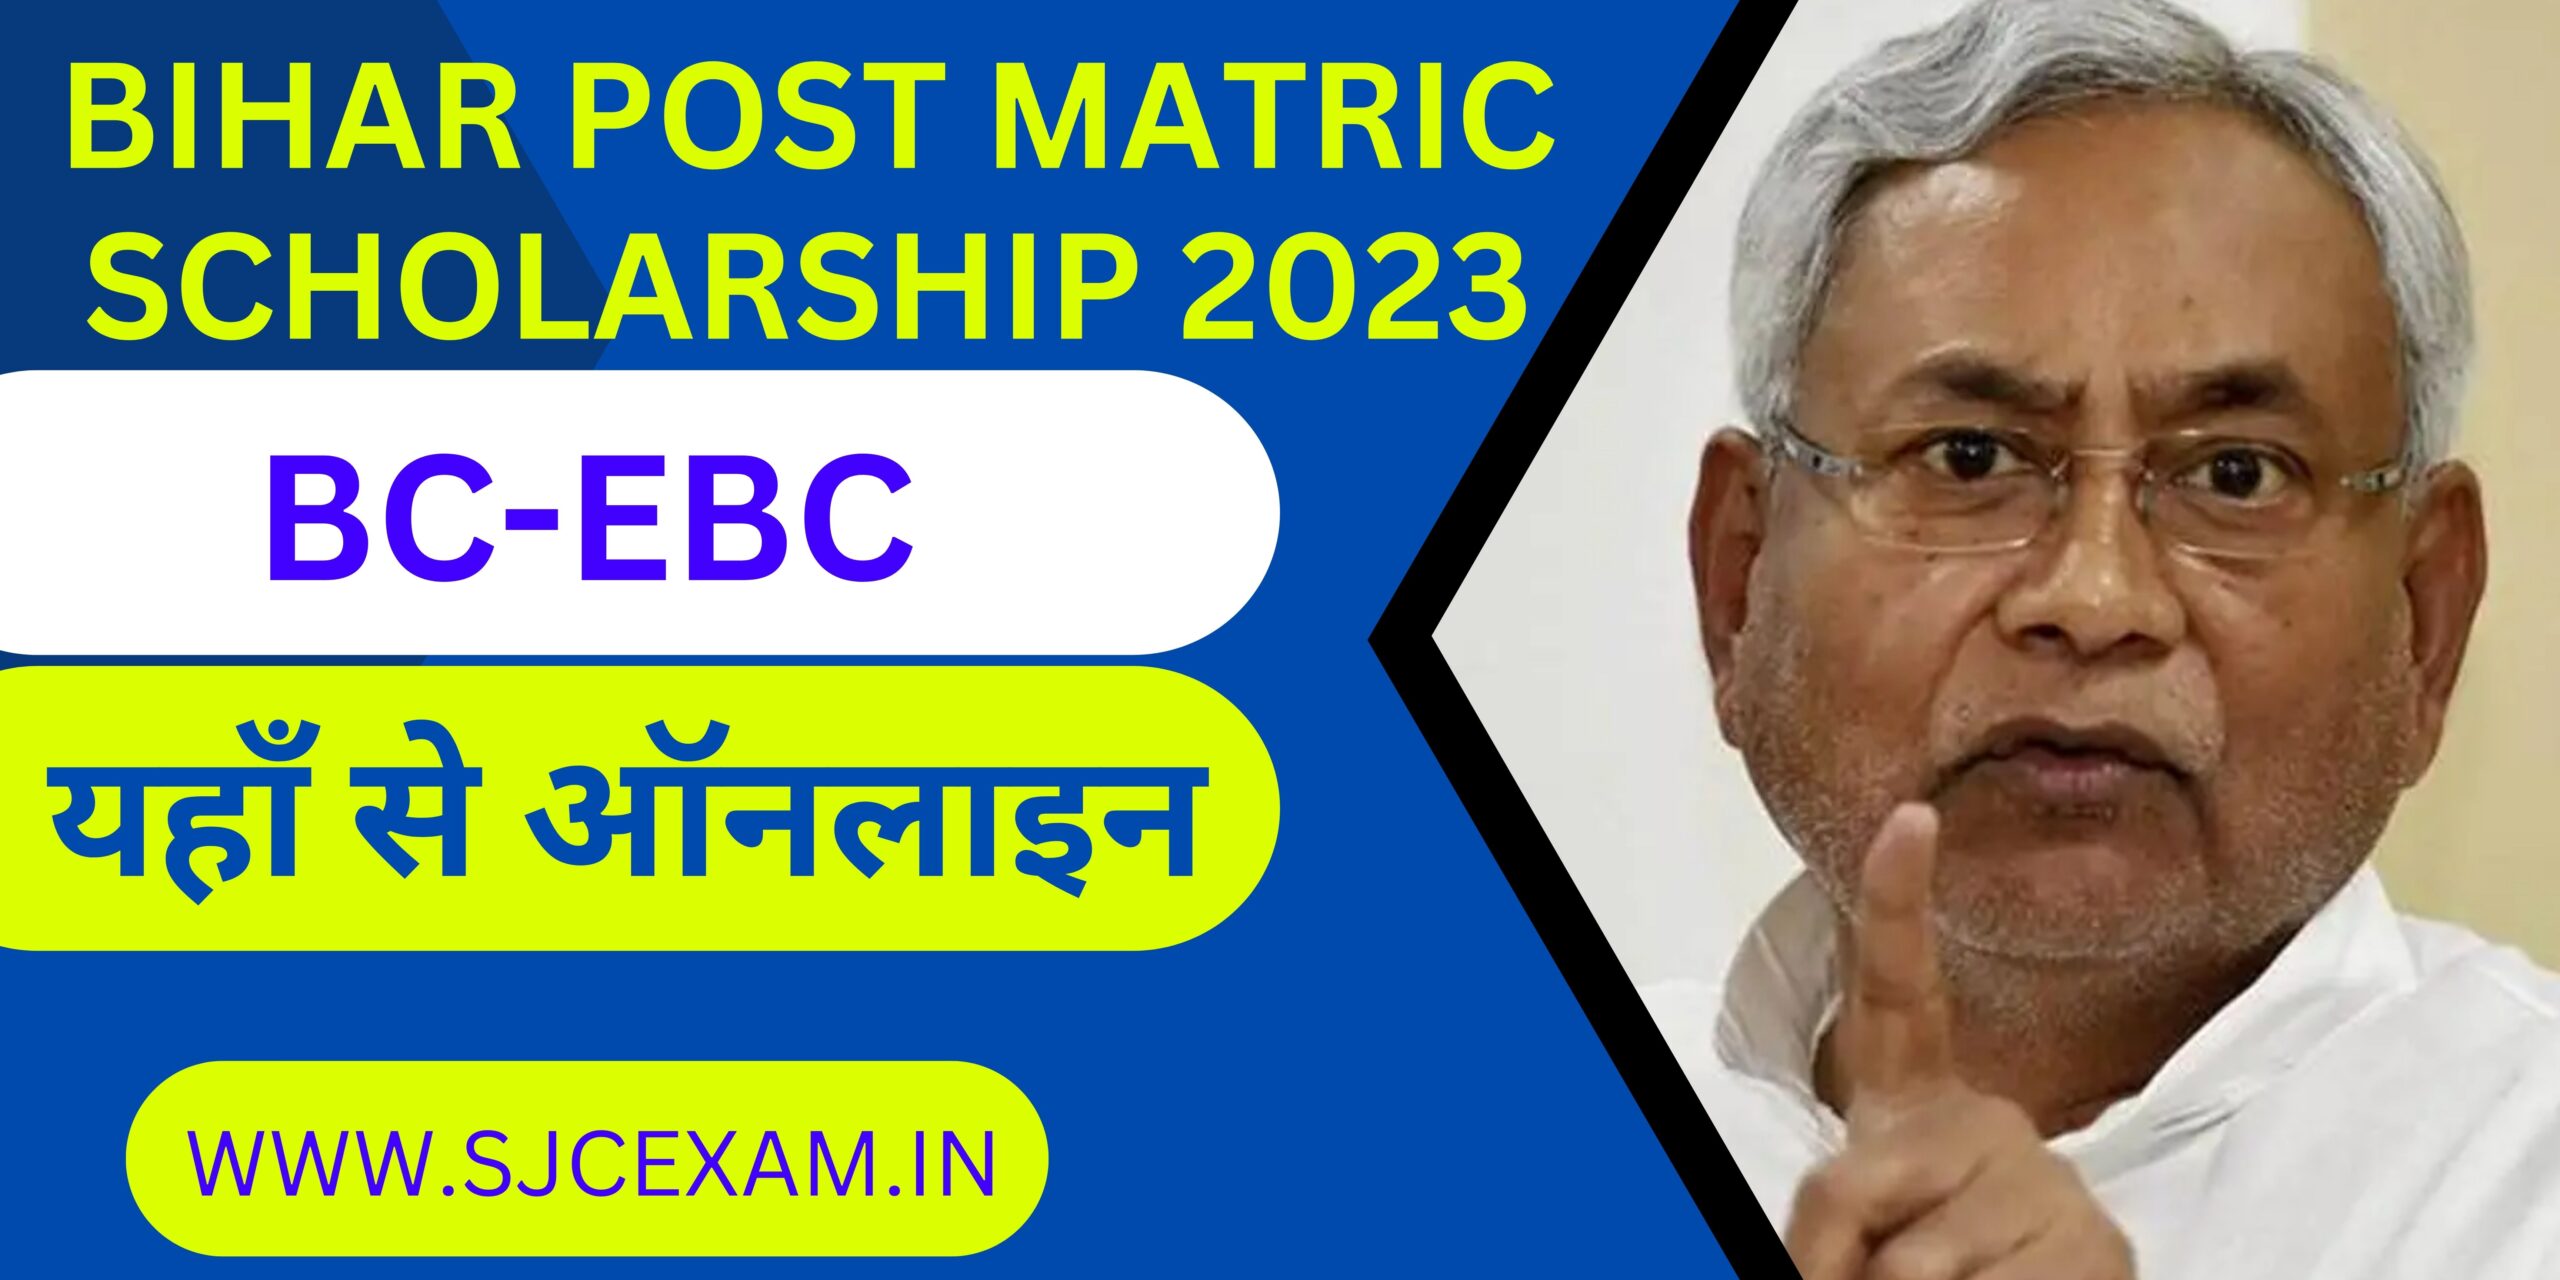 Bihar Post Matric Scholarship 2023 BC-EBC Online Apply, यहां से कर